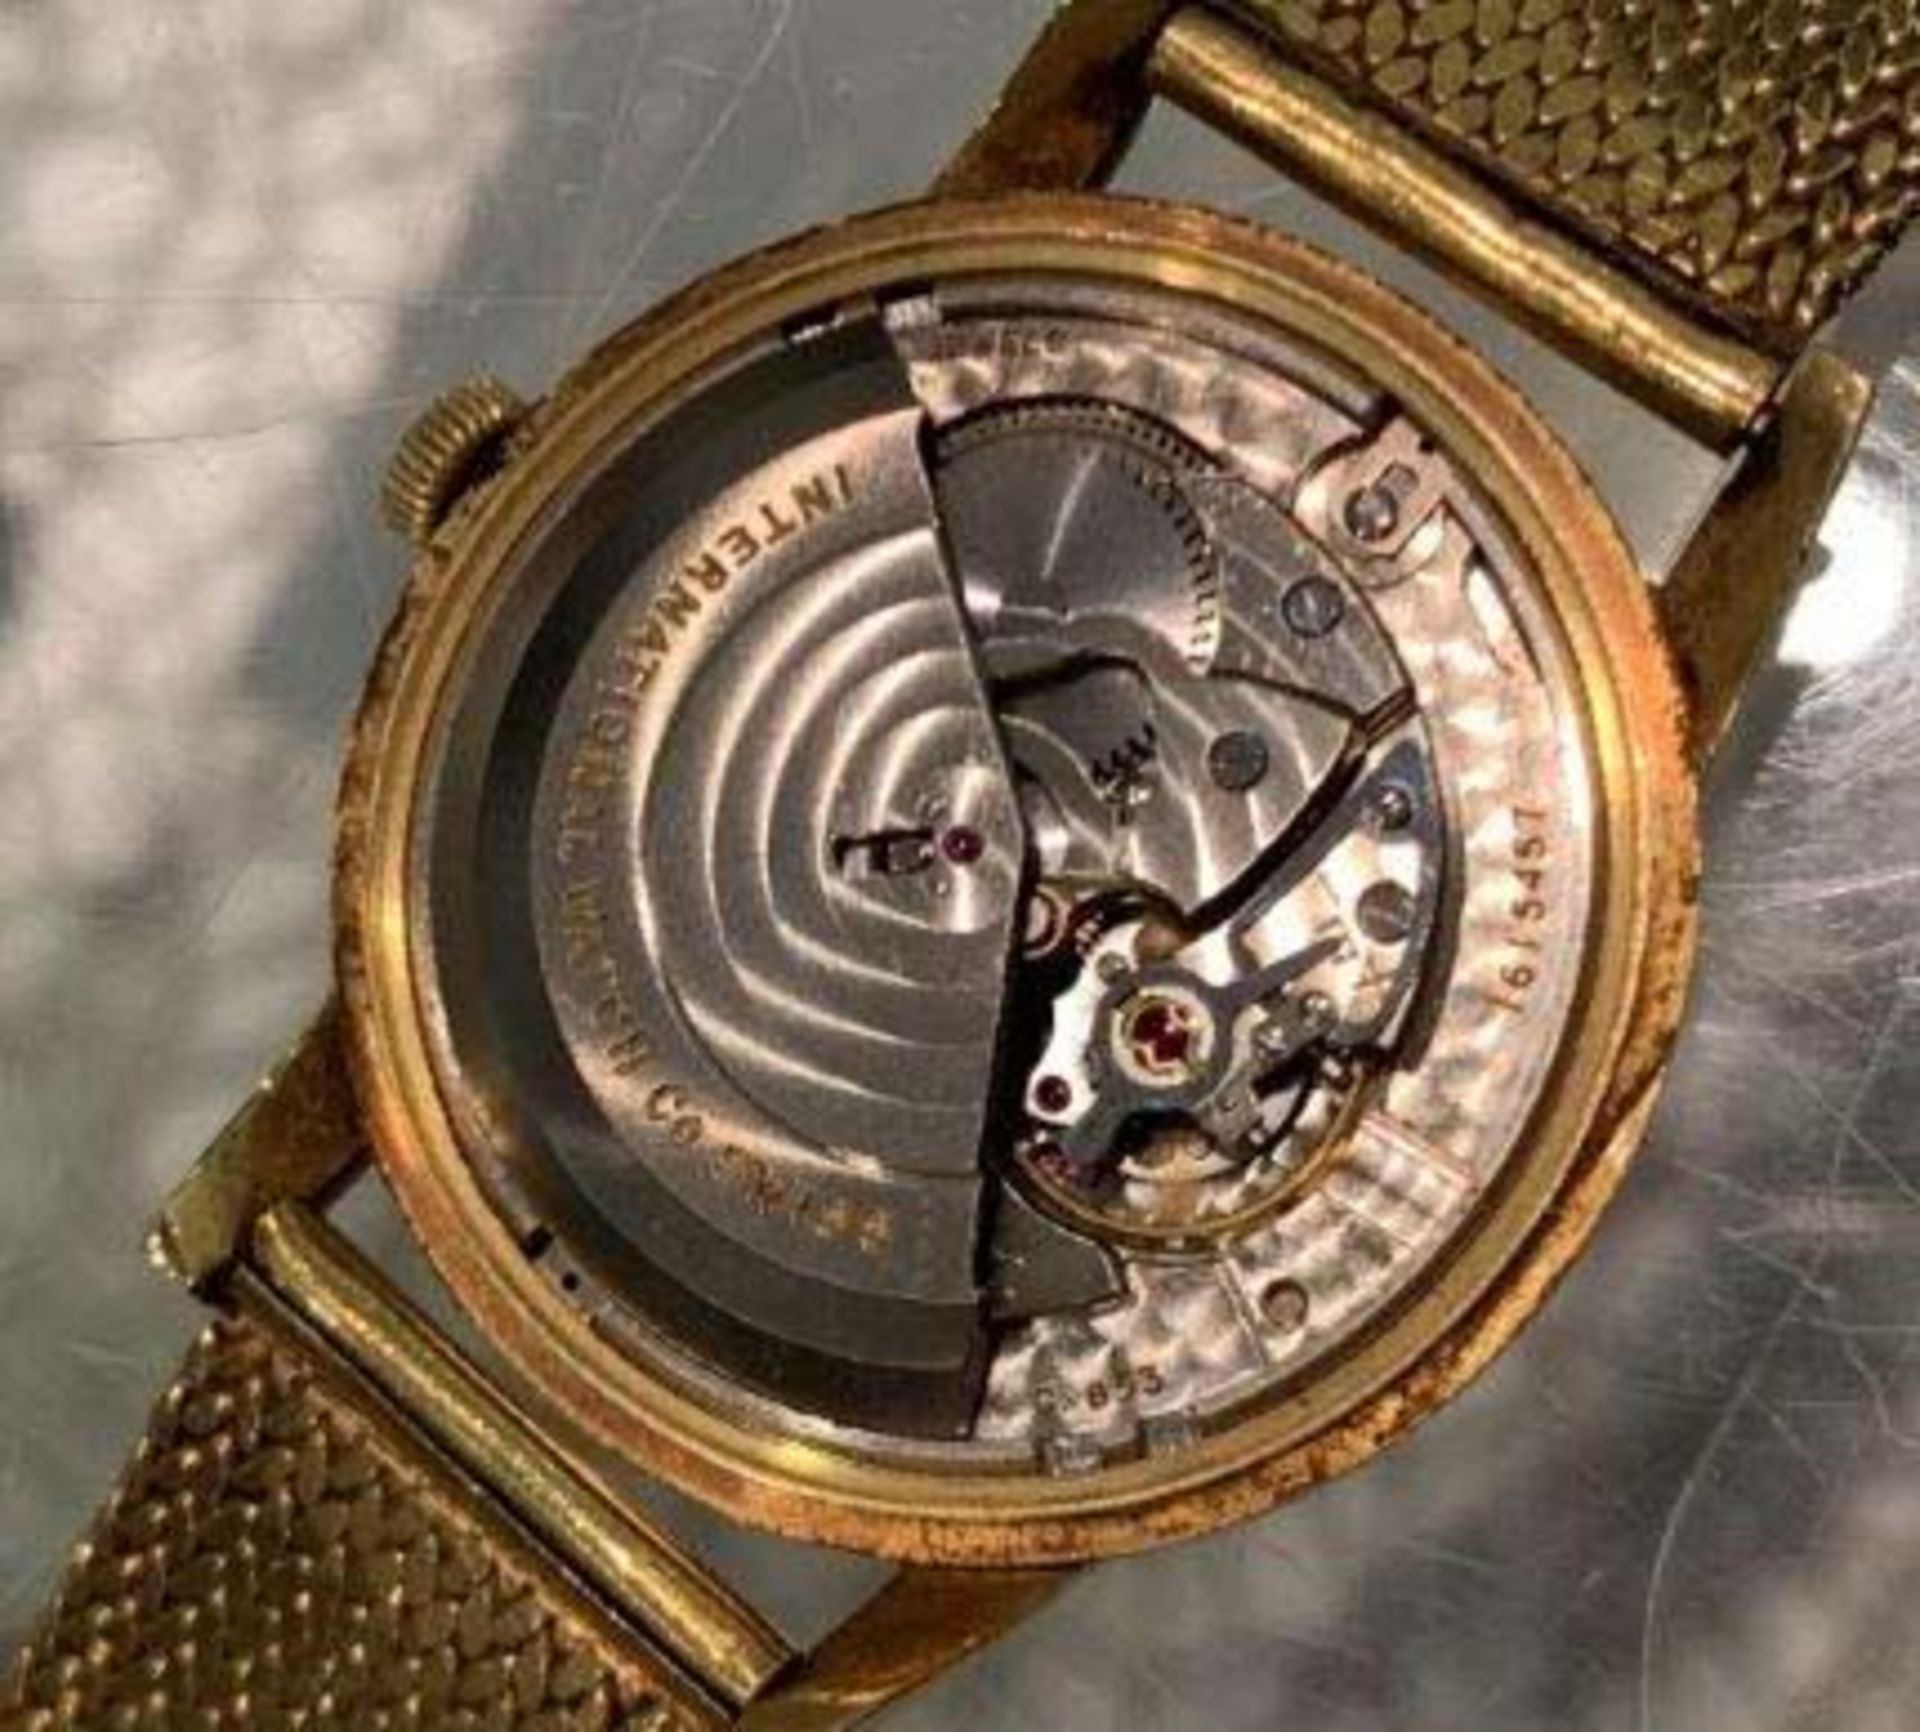 IWC (International Watch Company) Herrenarmbanduhr, 750er GG, Automatic, Gebrauchsspuren, L. 21 - Image 5 of 5